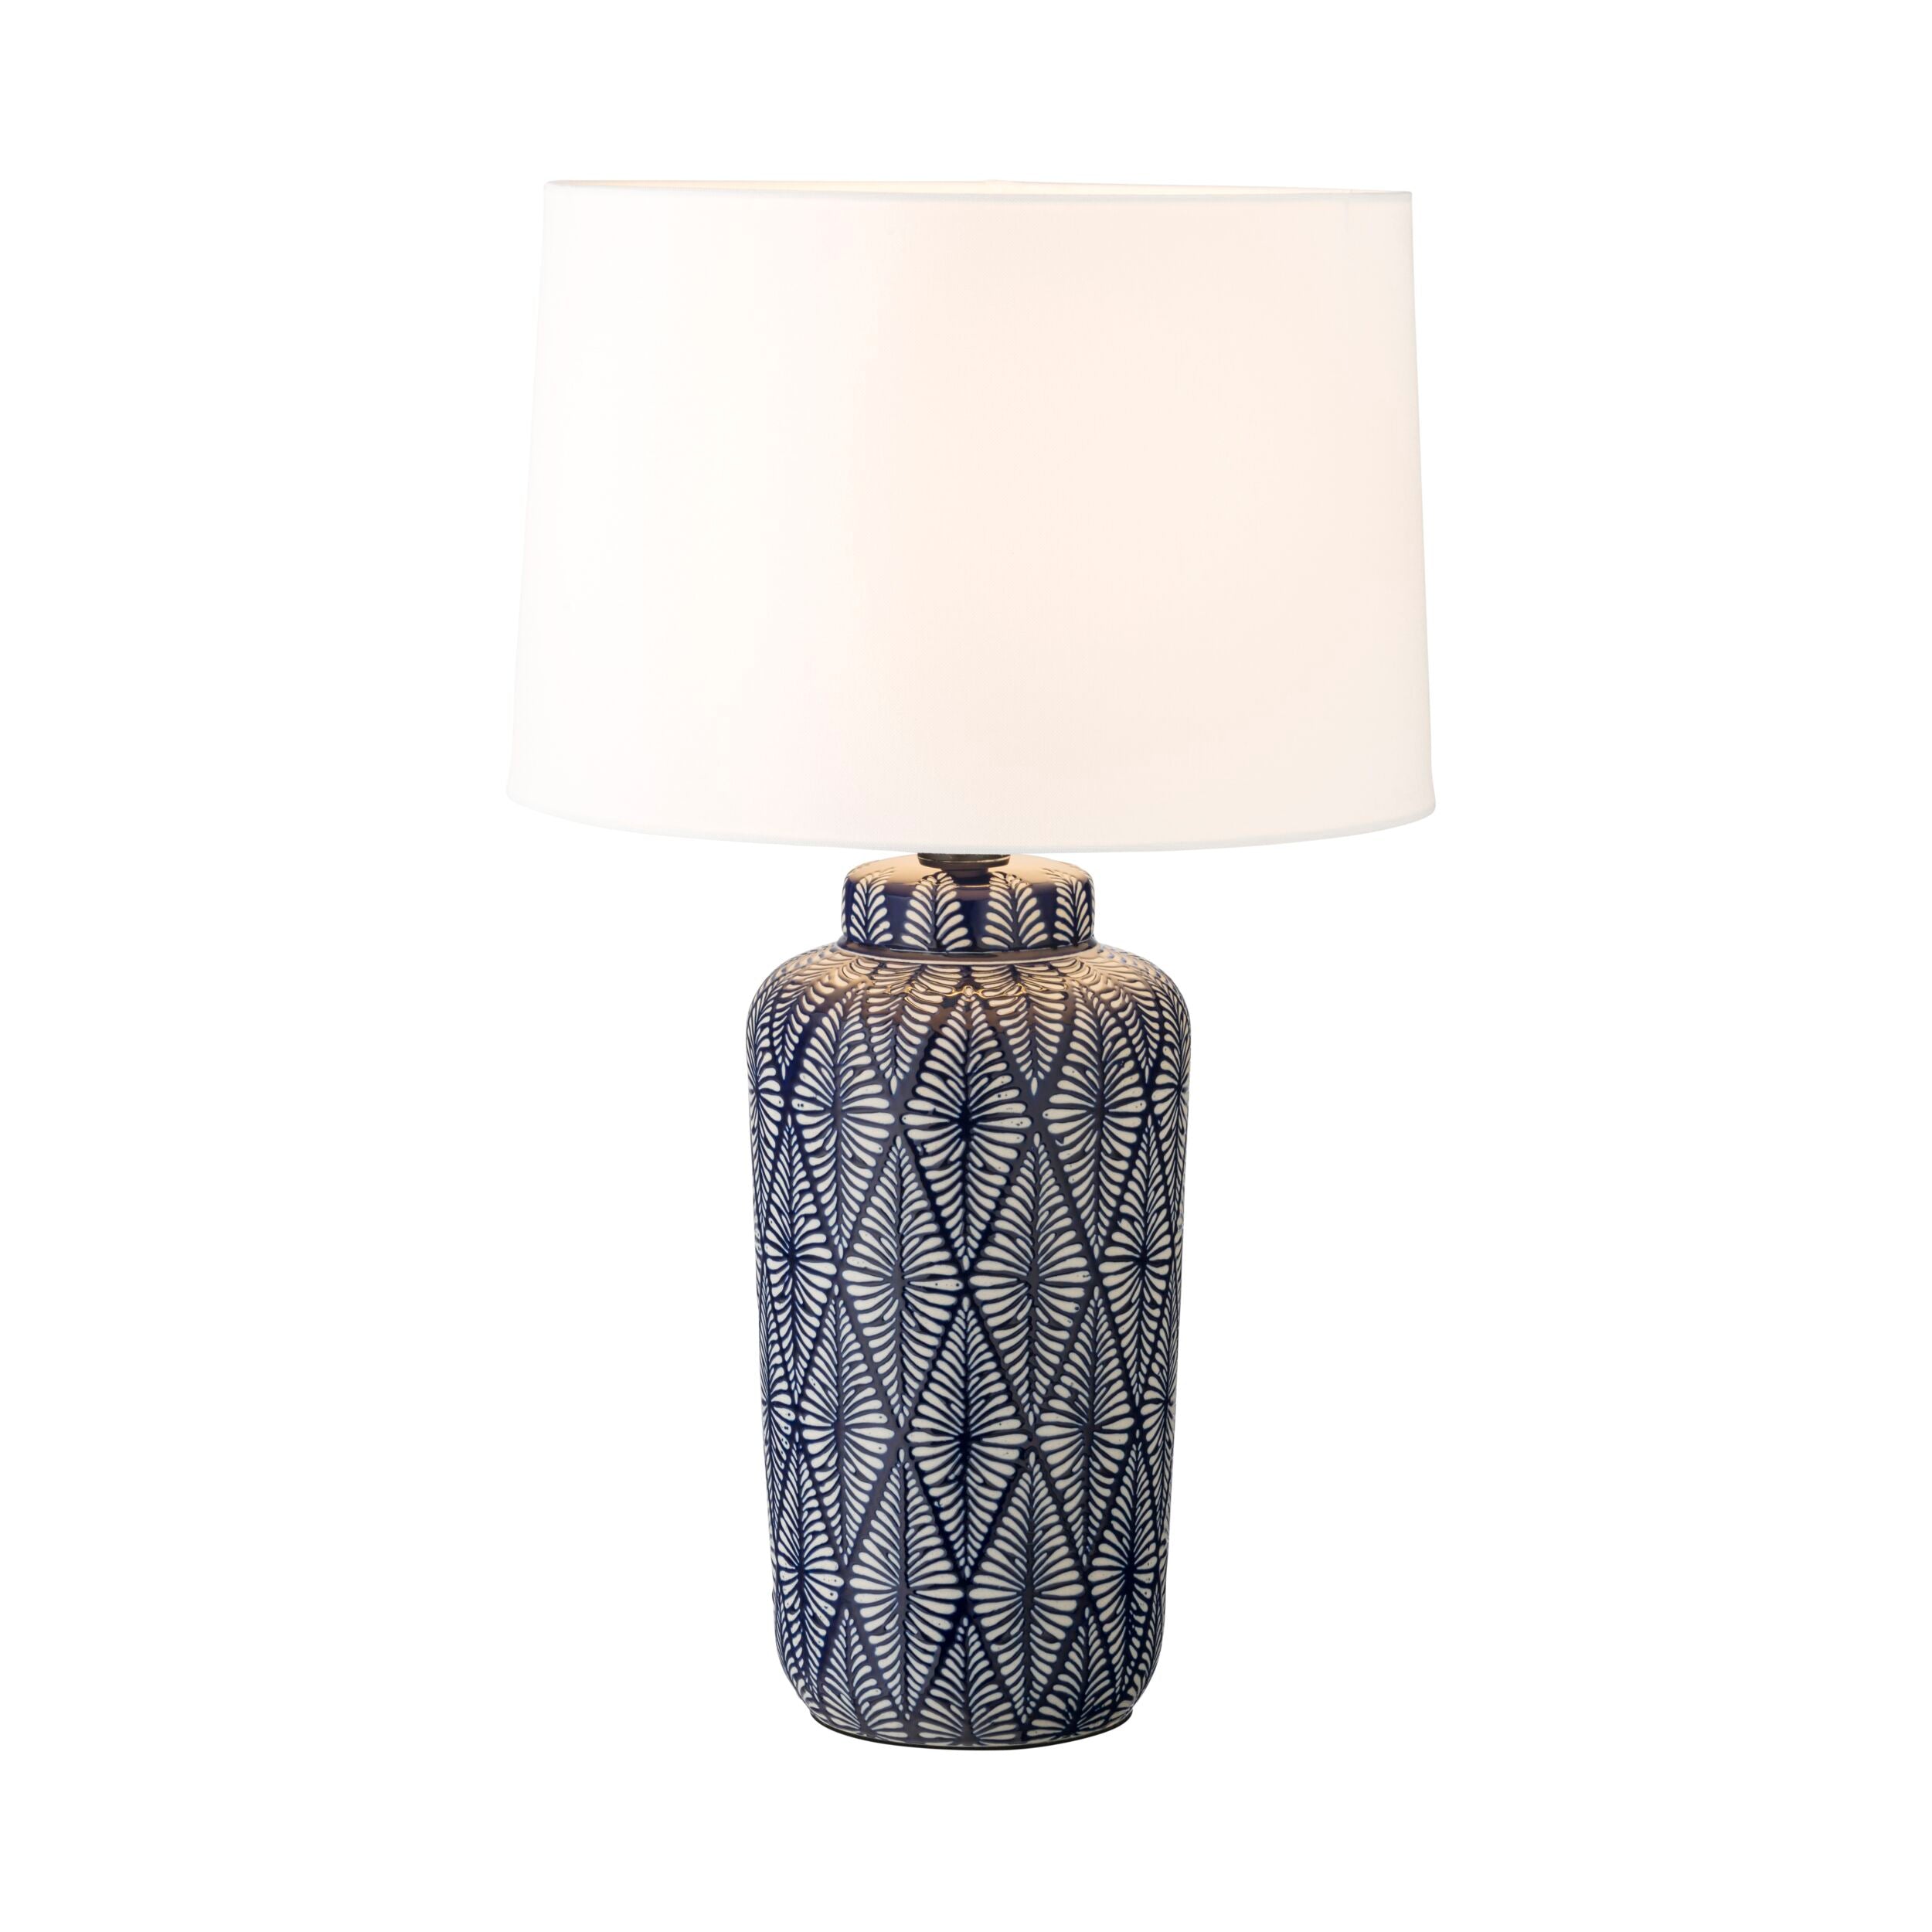 Mystic Ceramic Jar Table Lamp 46cm Shade Size 35 x 38 x 25cm